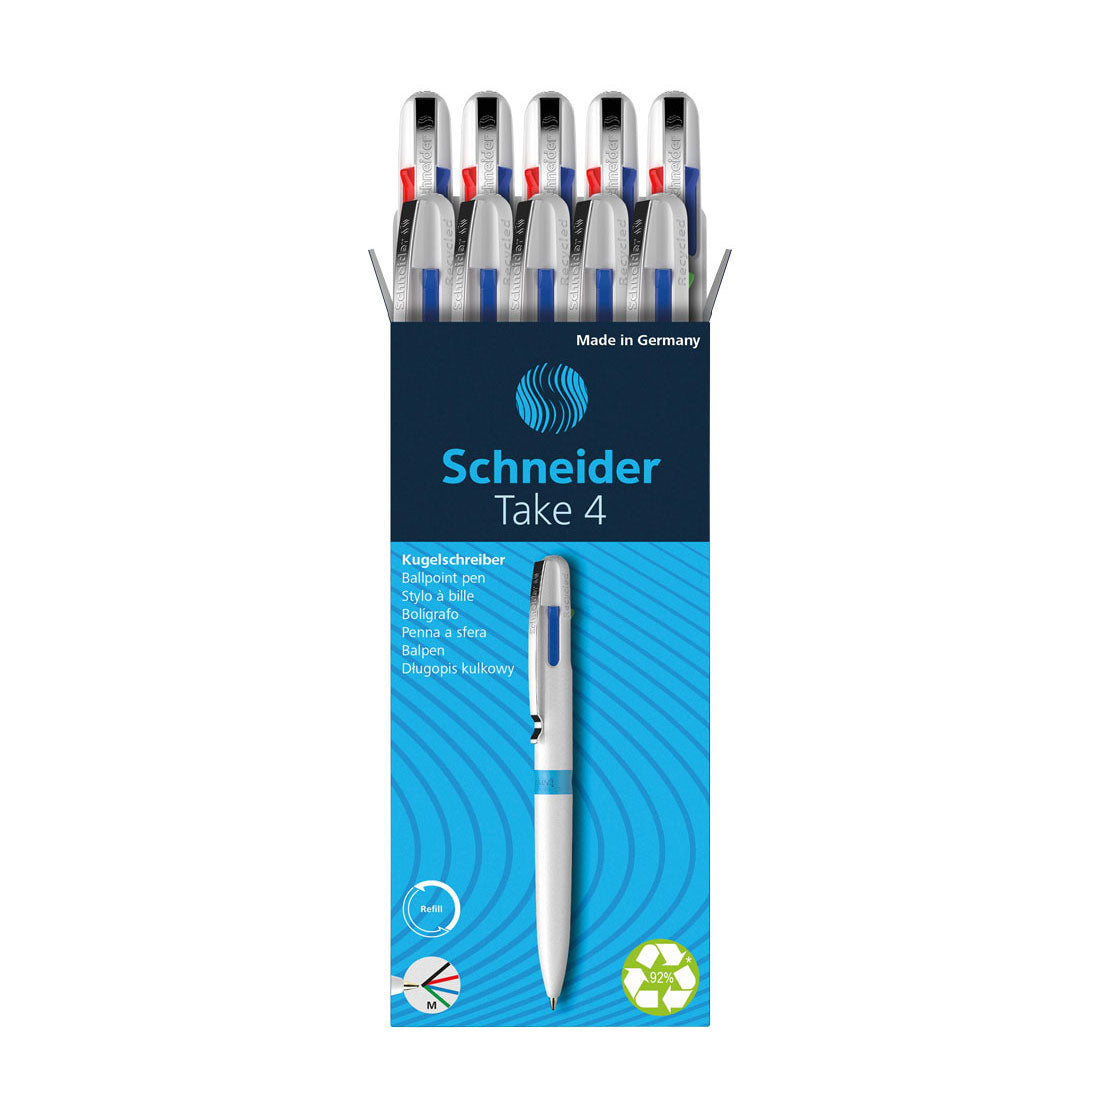 Take 4 Multi 4- Color Ballpoint Pen M, Box of 10 units - White/Blue